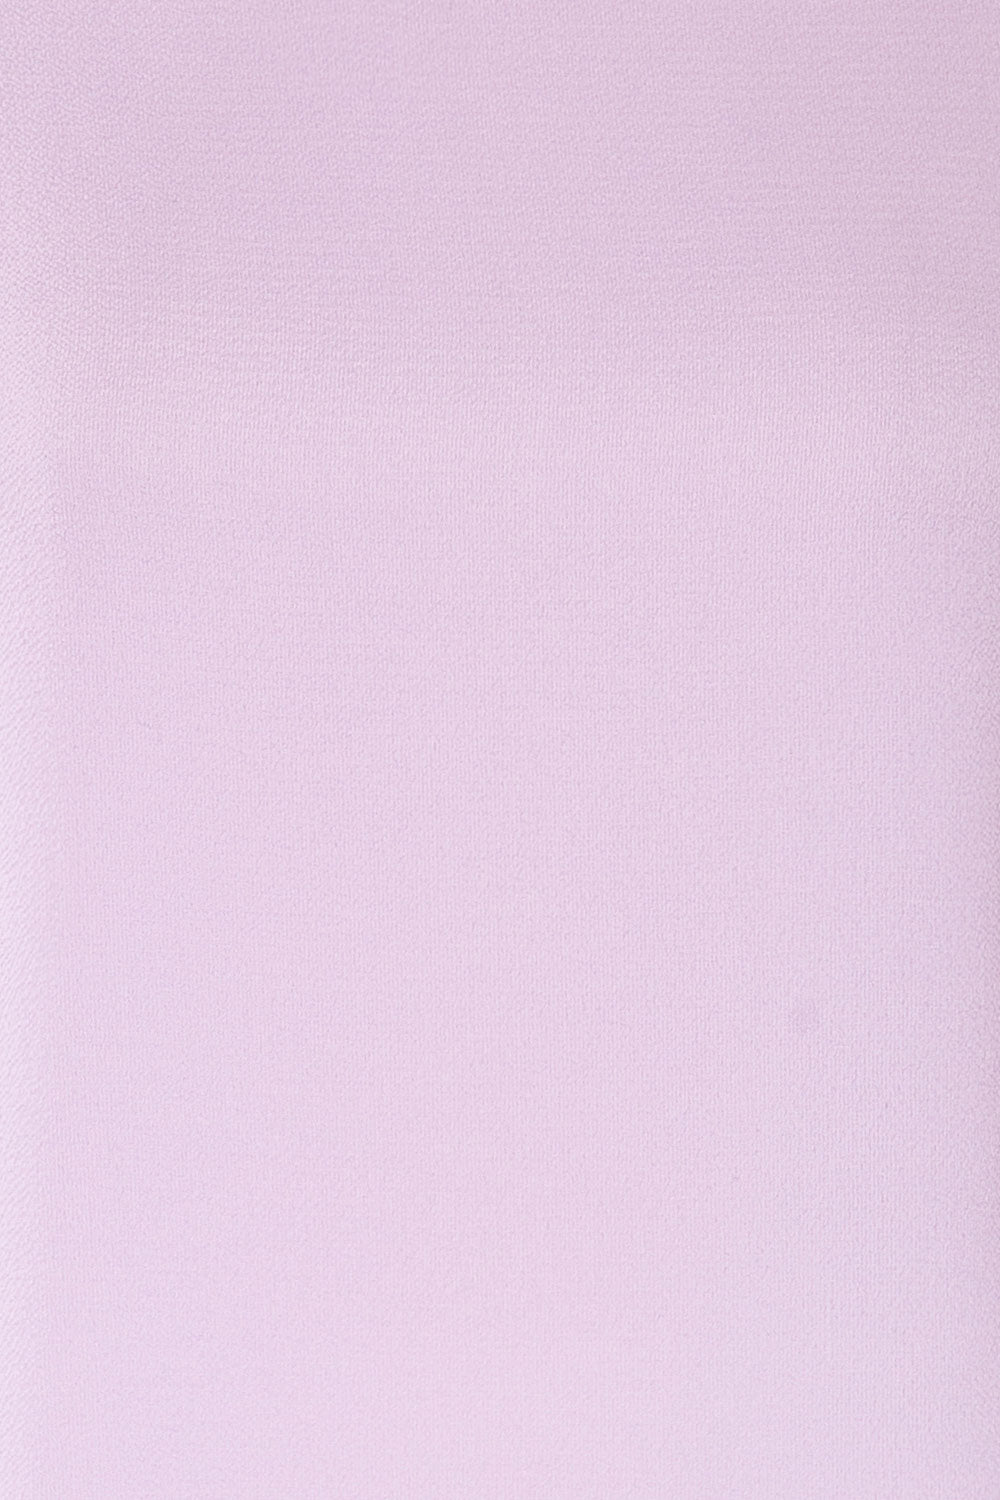 Perth Lavender Crepe Short Sleeve Blouse | La petite garçonne fabric